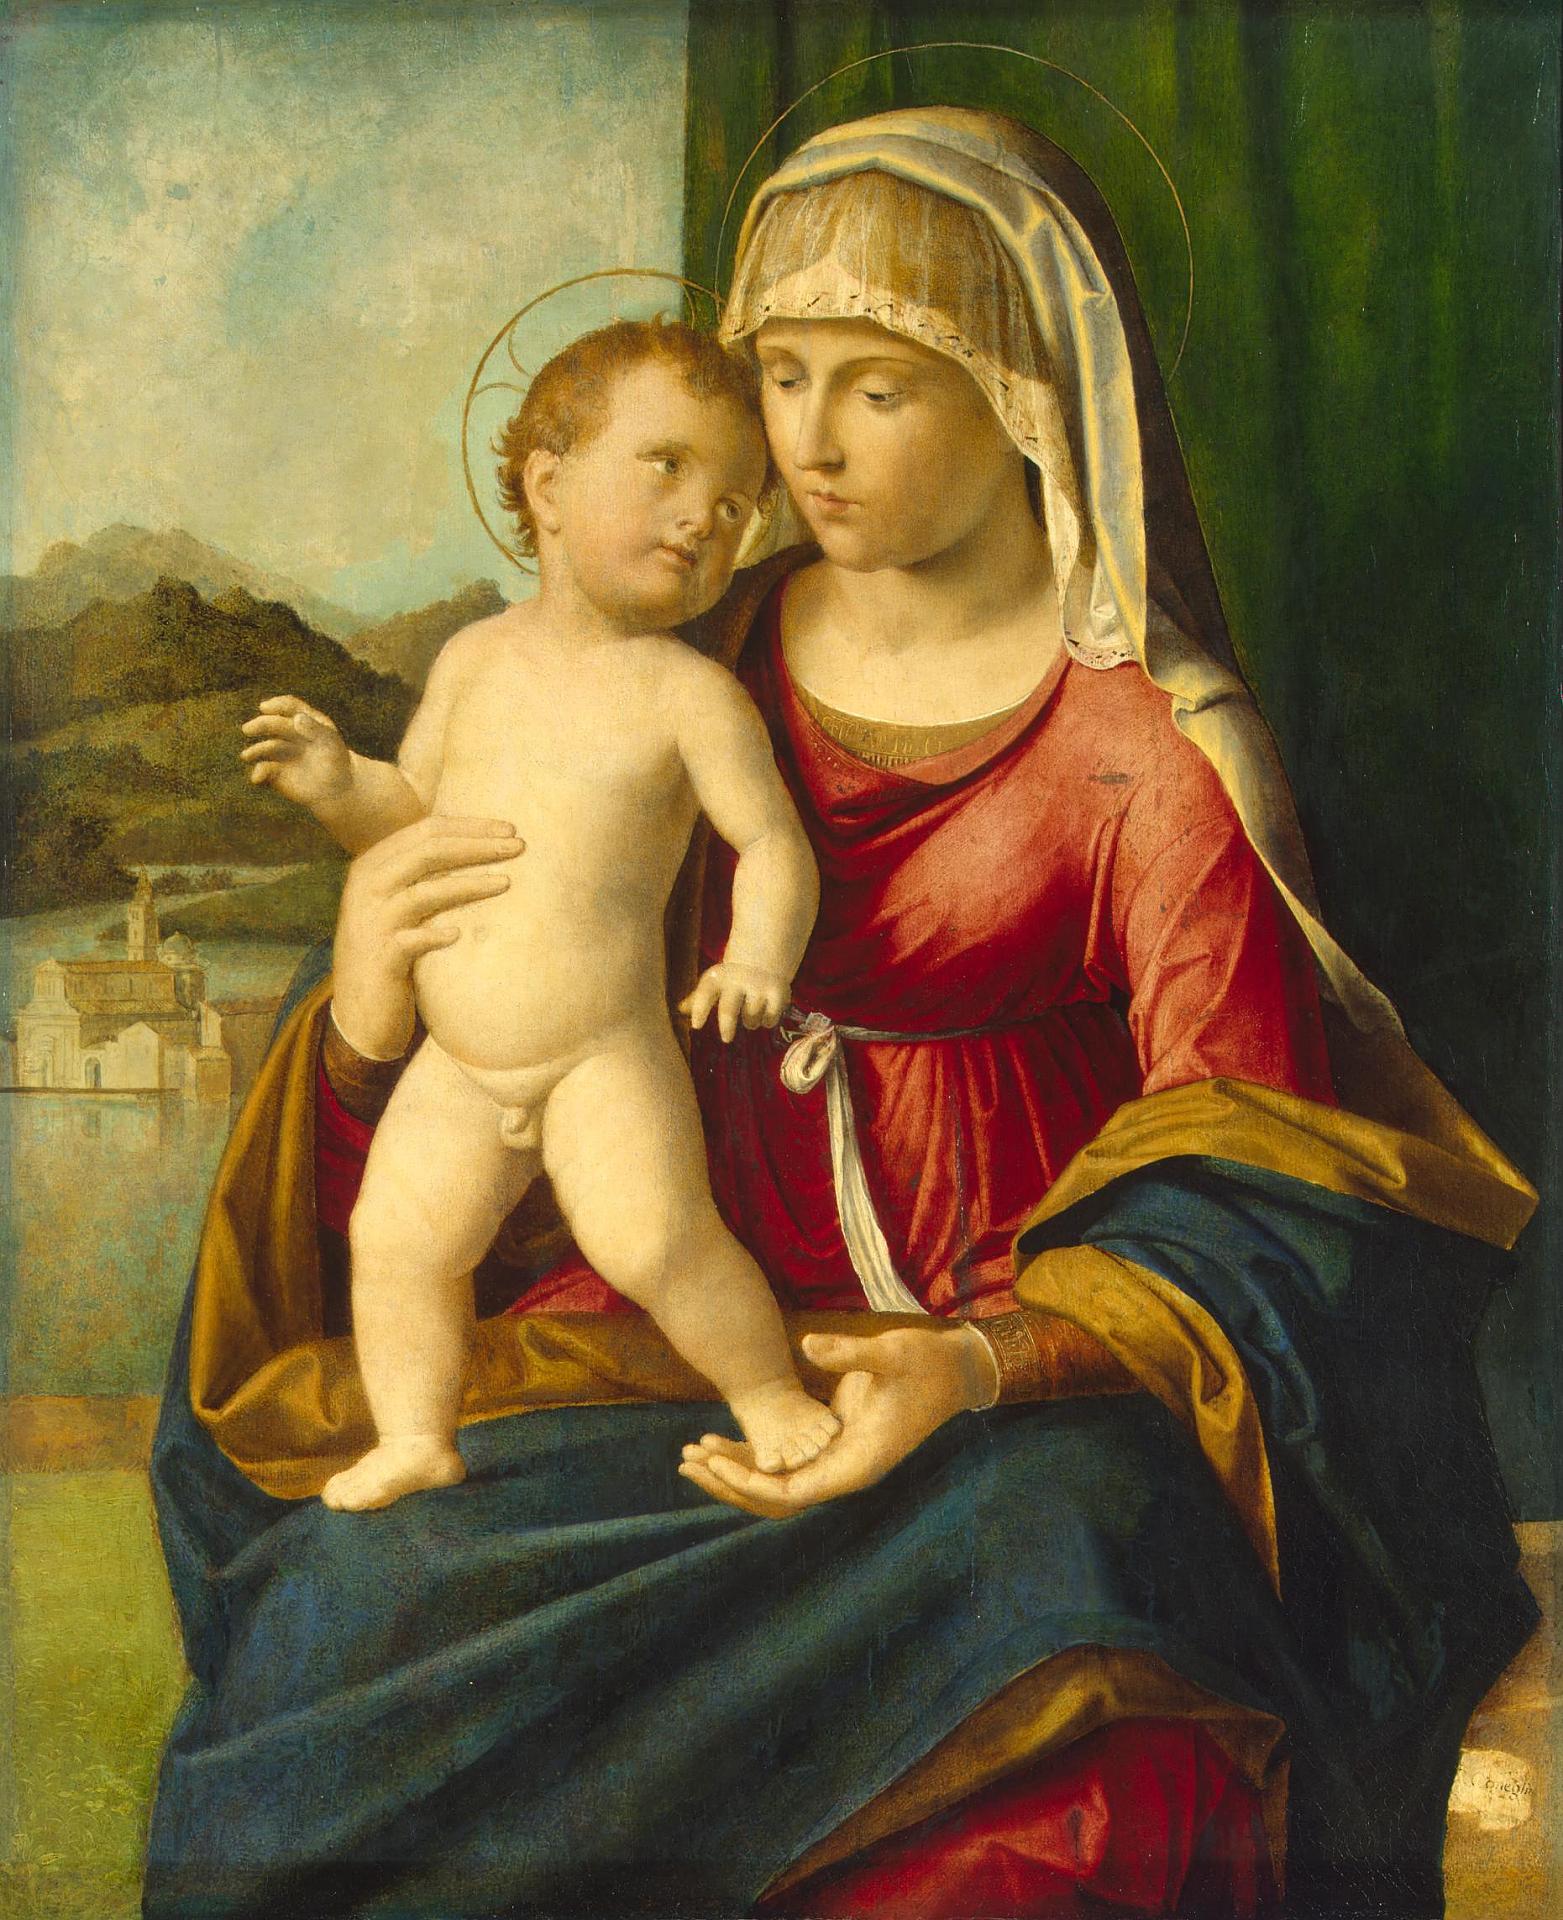 Джованни Баттиста Чима да Конельяно. "Мадонна с Младенцем". Между 1496 и 1499. Эрмитаж, Санкт-Петербург.